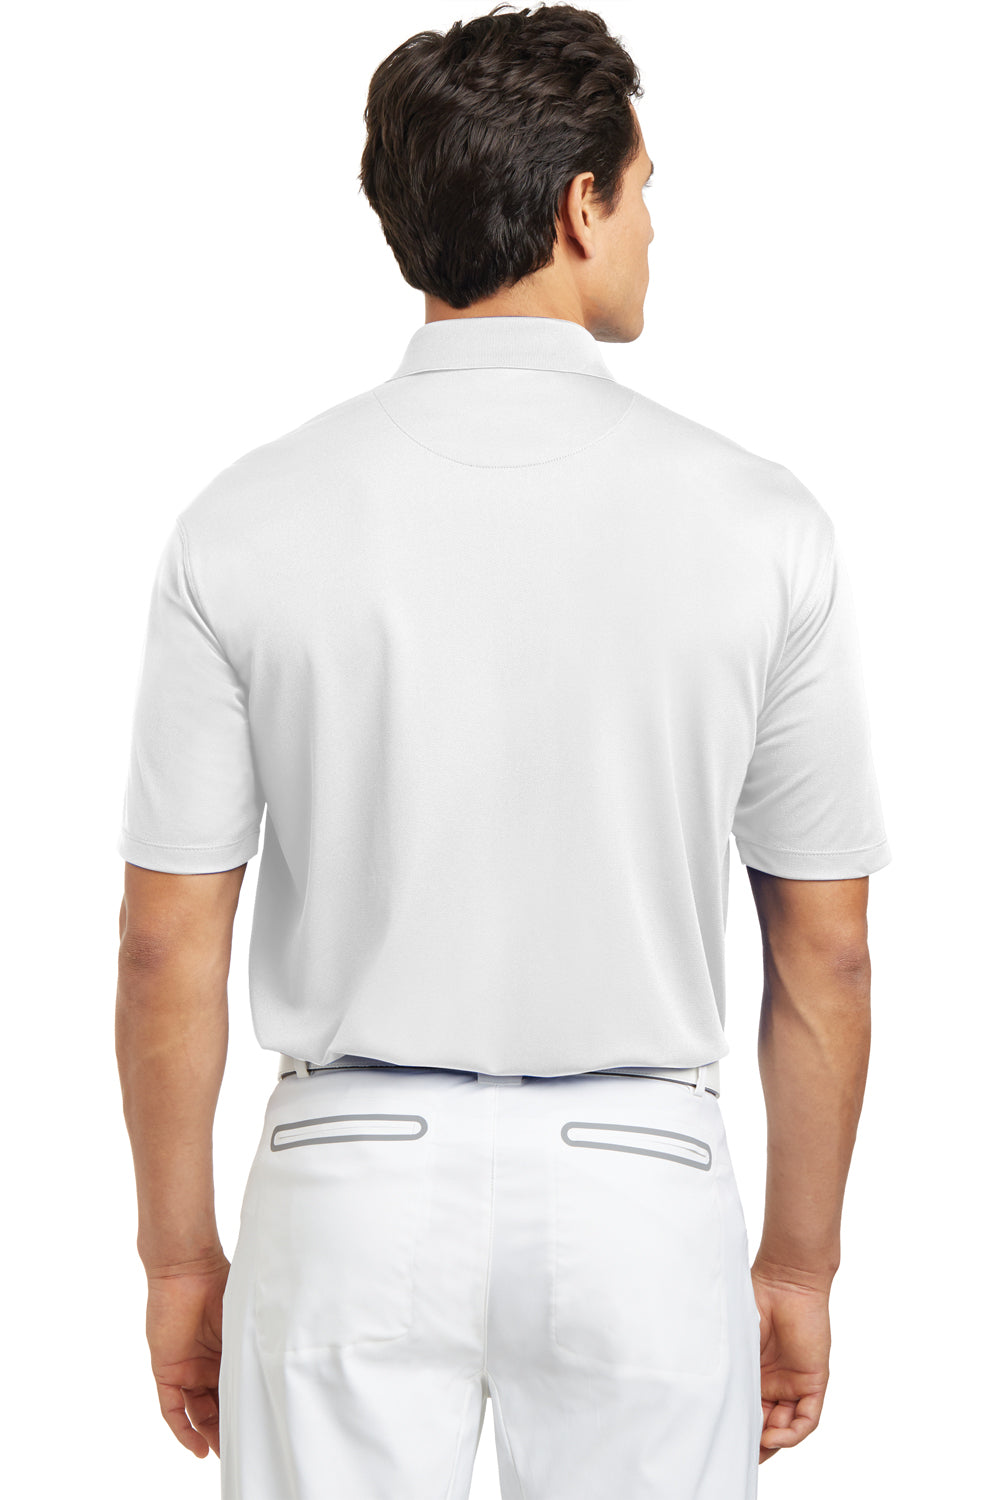 Nike 203690 Mens Tech Basic Dri-Fit Moisture Wicking Short Sleeve Polo Shirt White Model Back